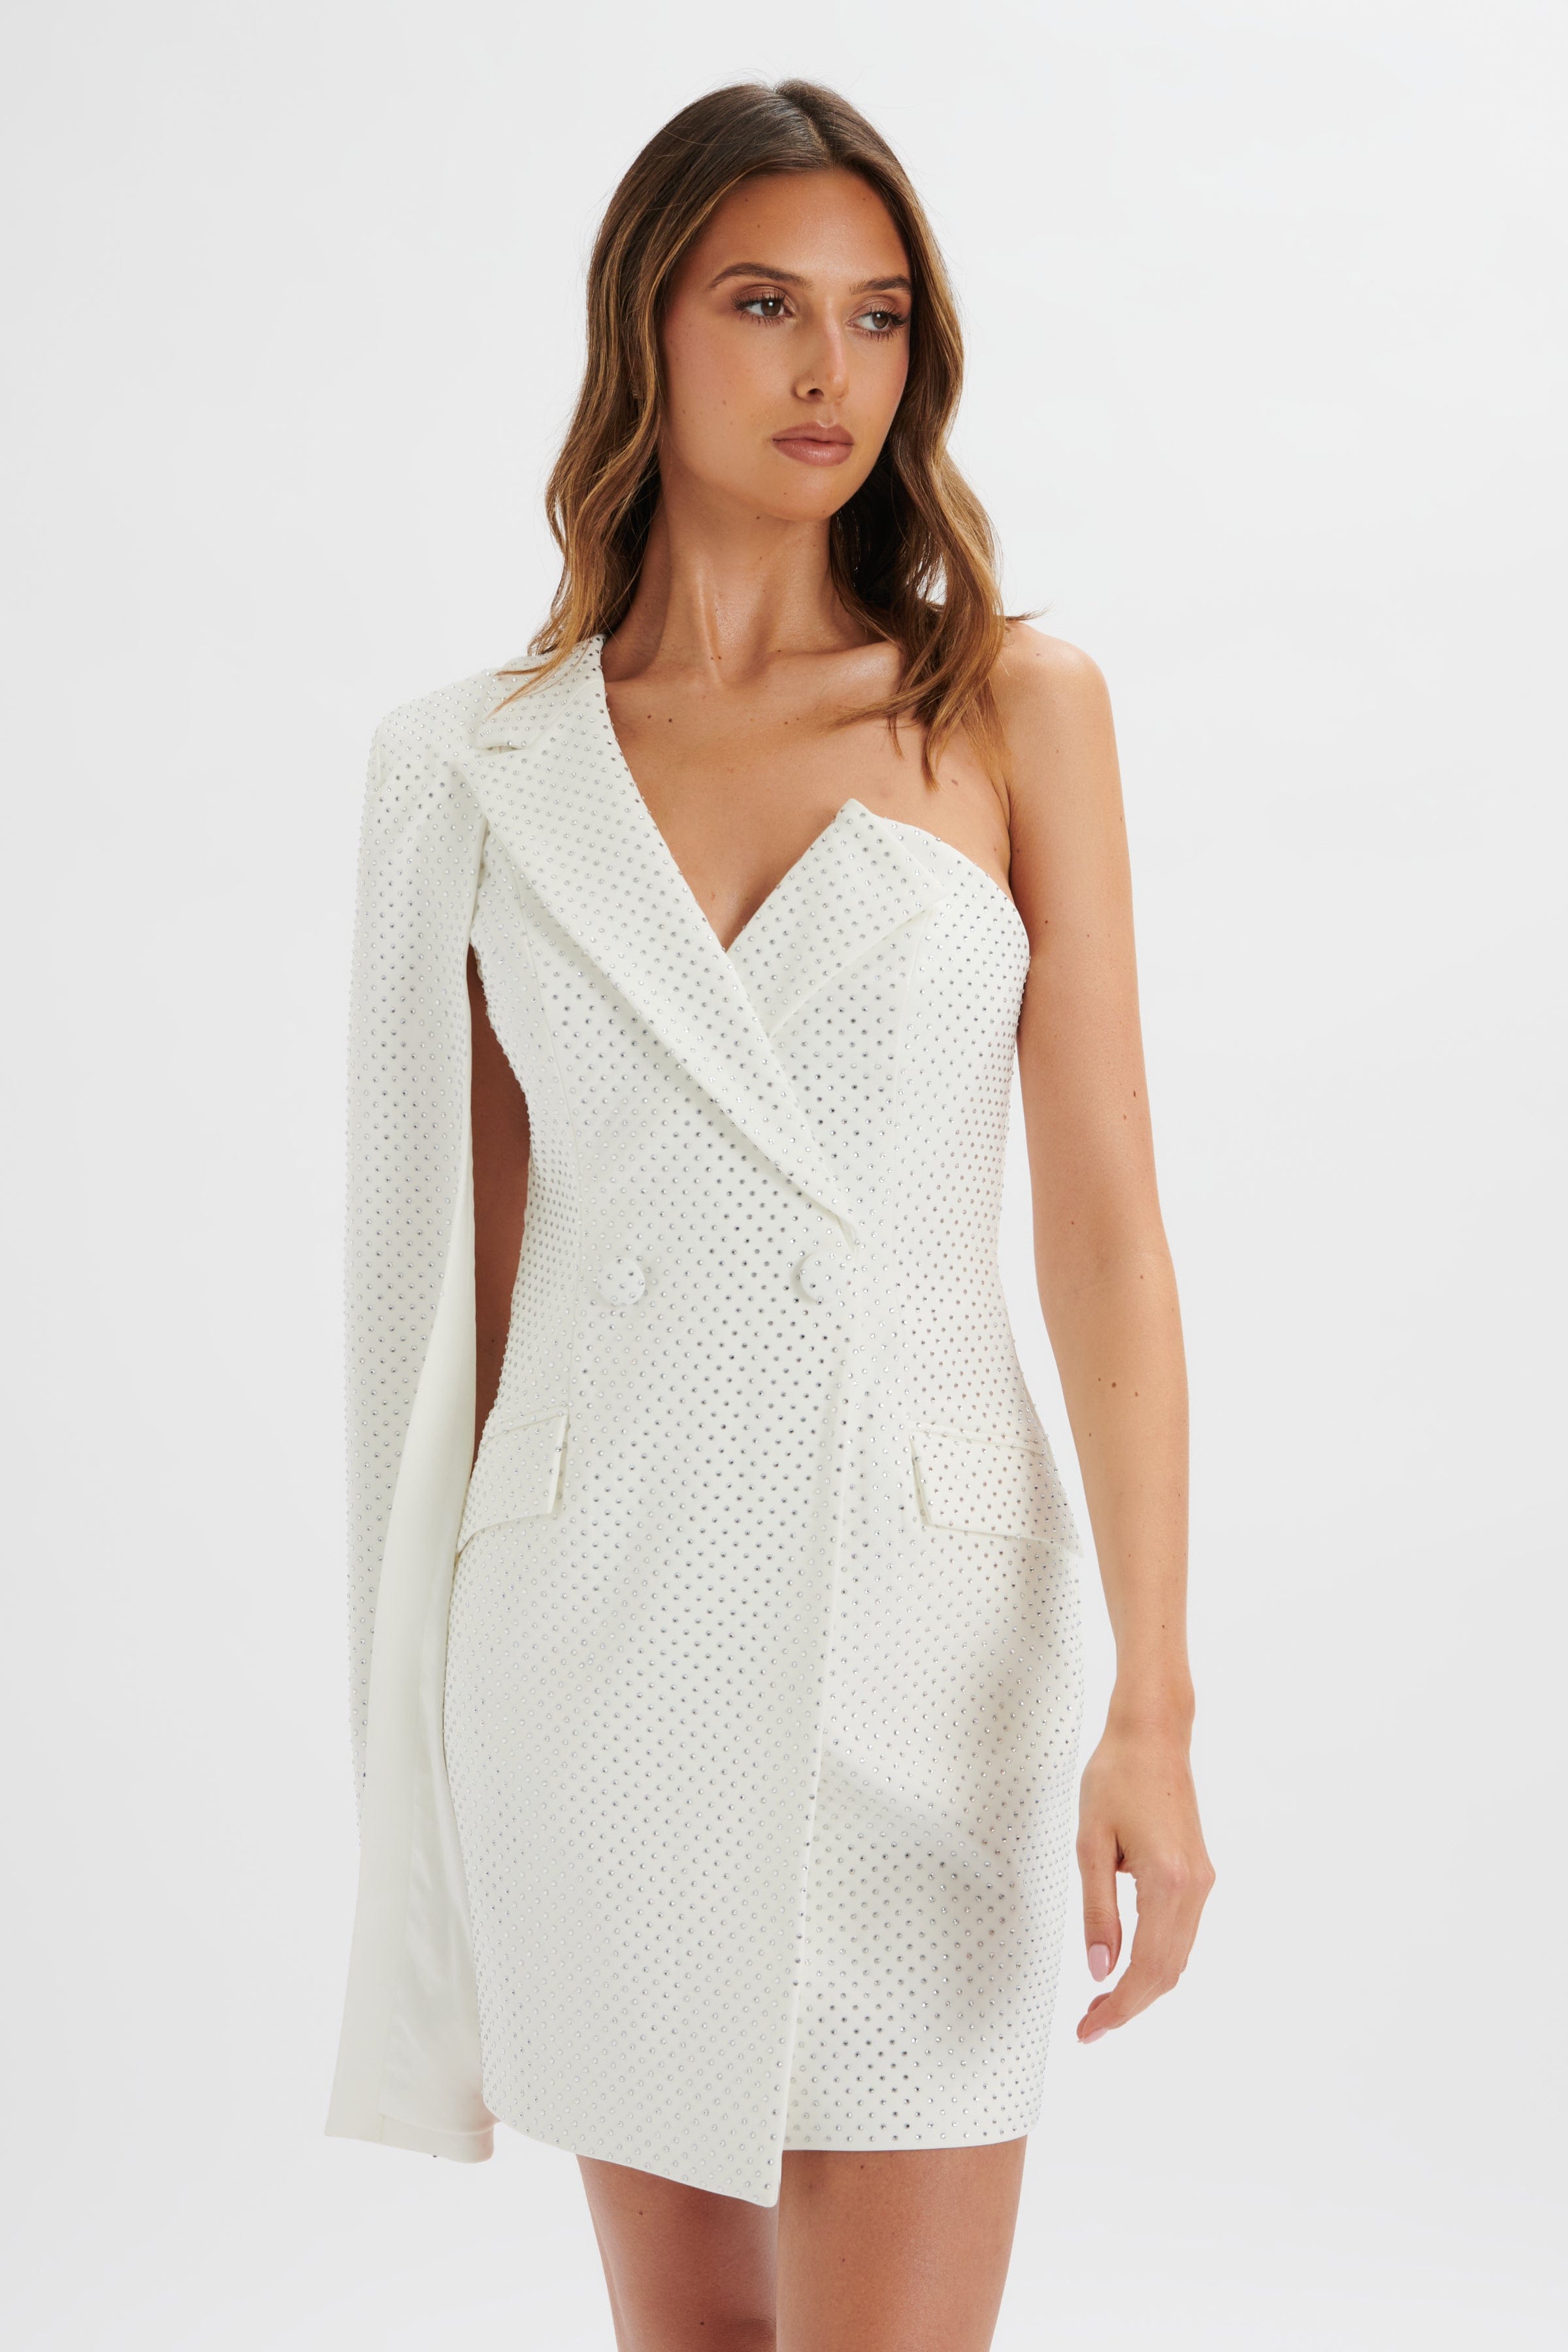 MARCY Crystal Embellished One Shoulder Cape Blazer Dress in White